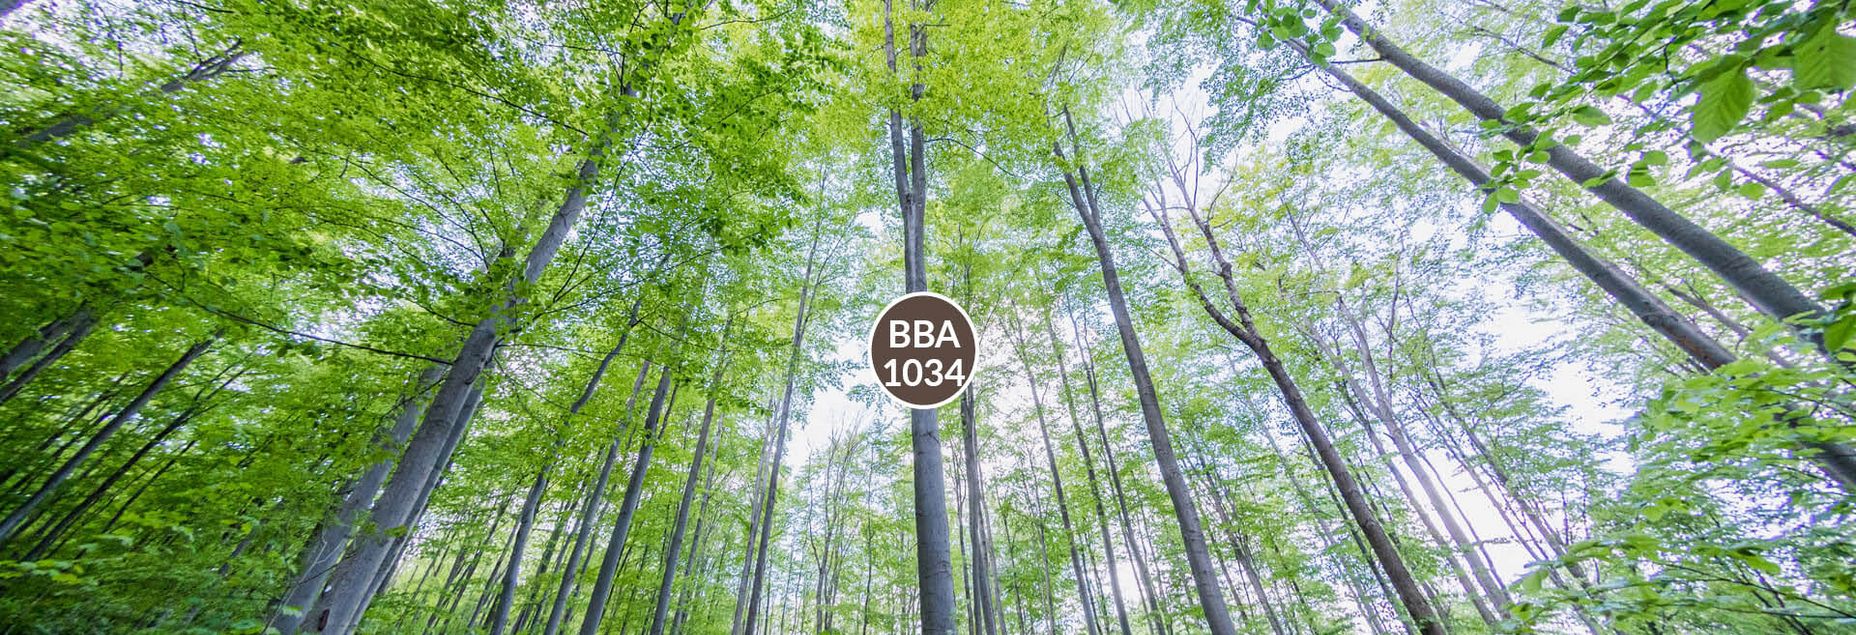 Baum BBA 1034 - Fisheyeperspektive